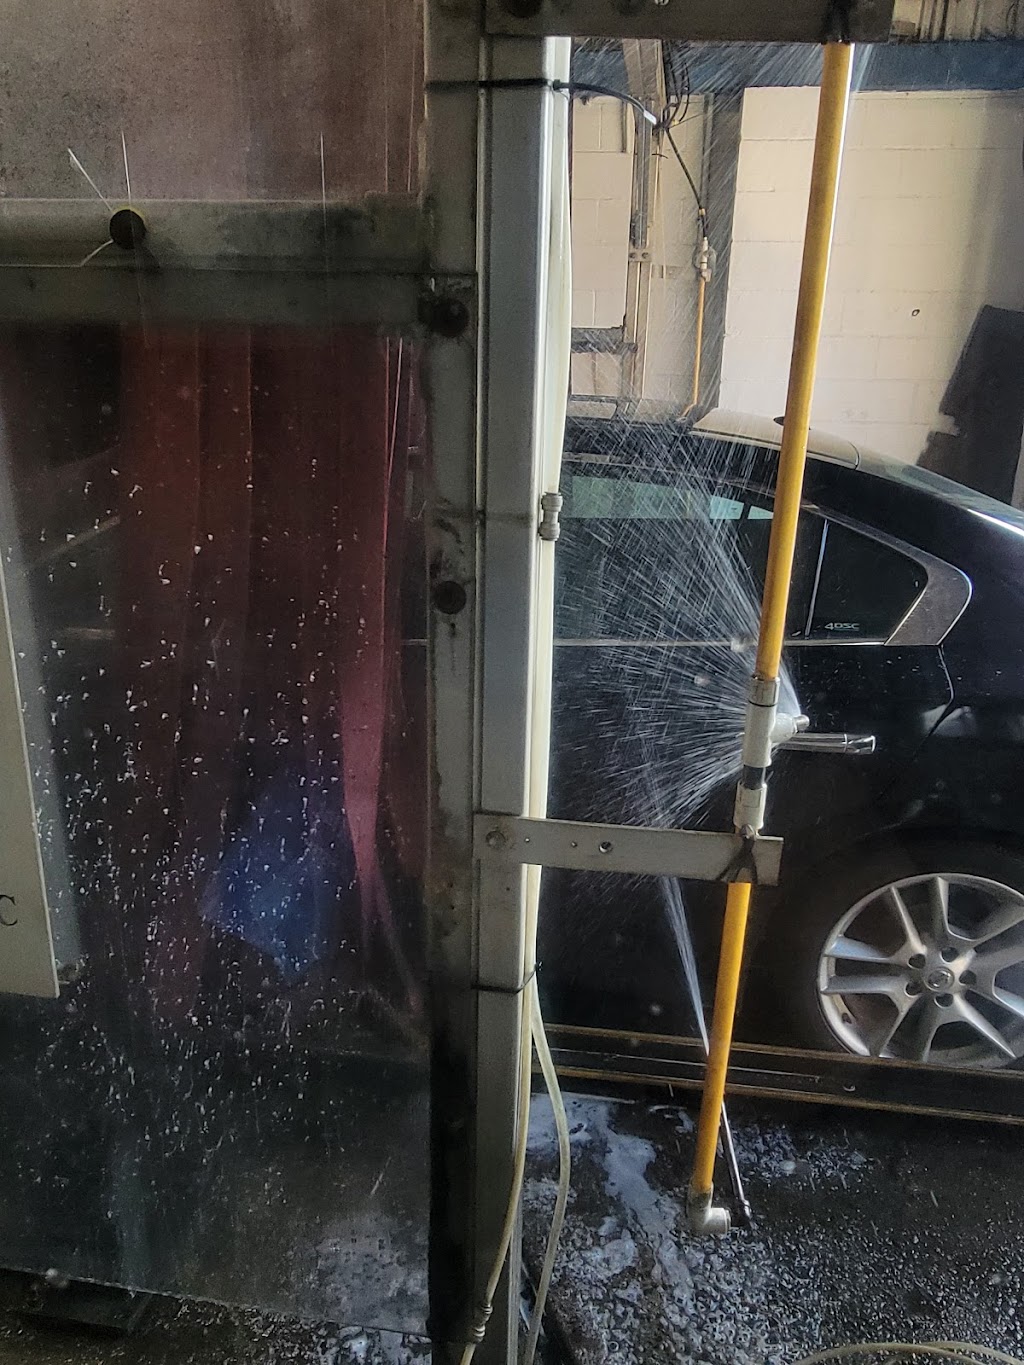 Windsor Car Wash featuring Neoglide | 610 US-130, East Windsor, NJ 08520 | Phone: (609) 448-0954